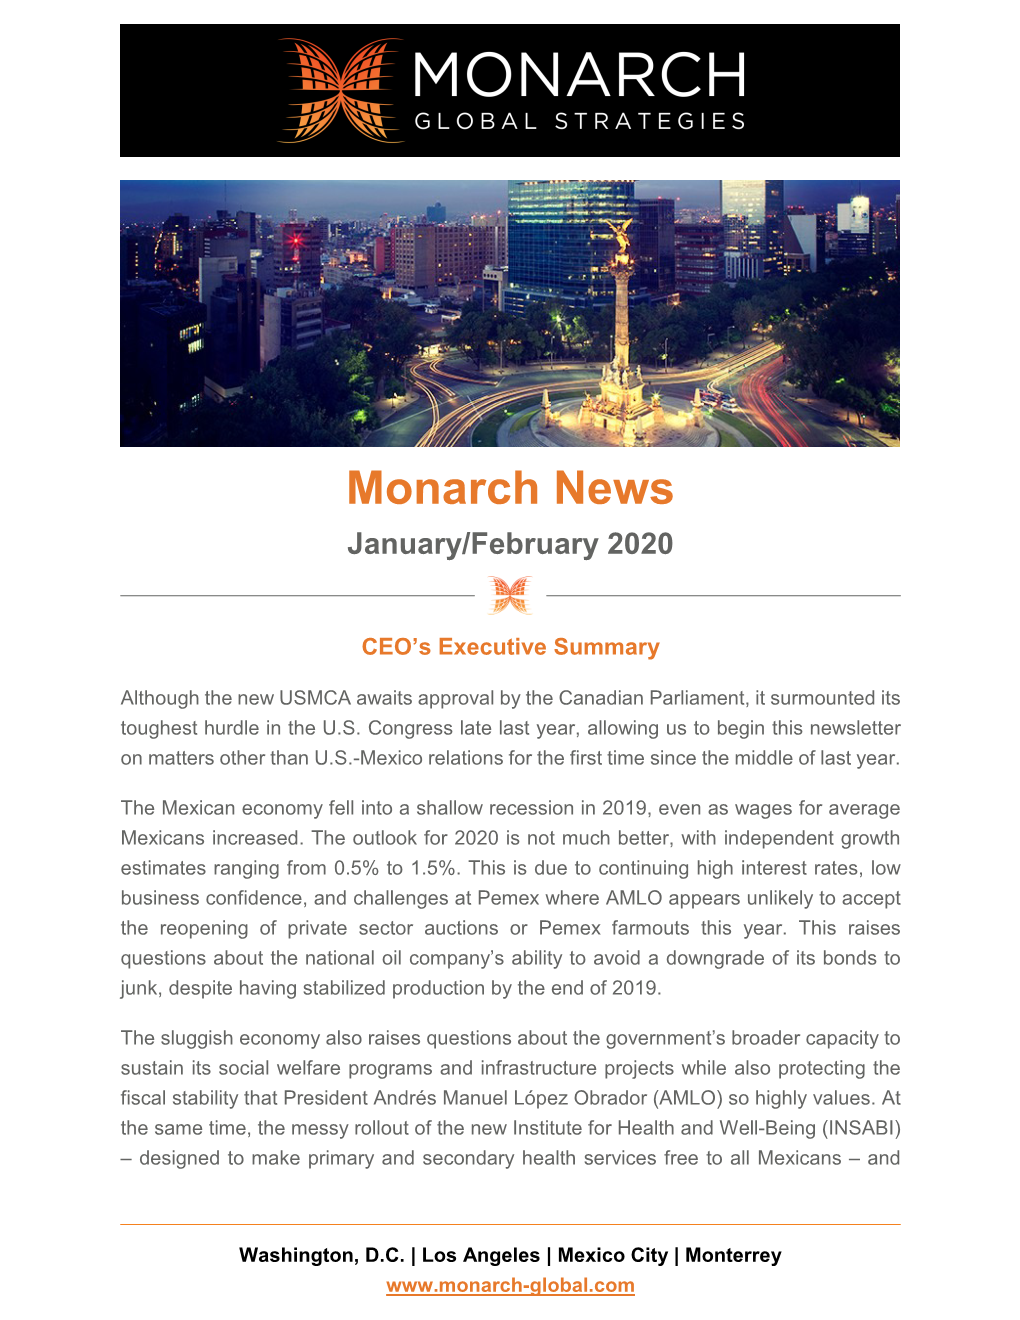 Monarch News January/February 2020